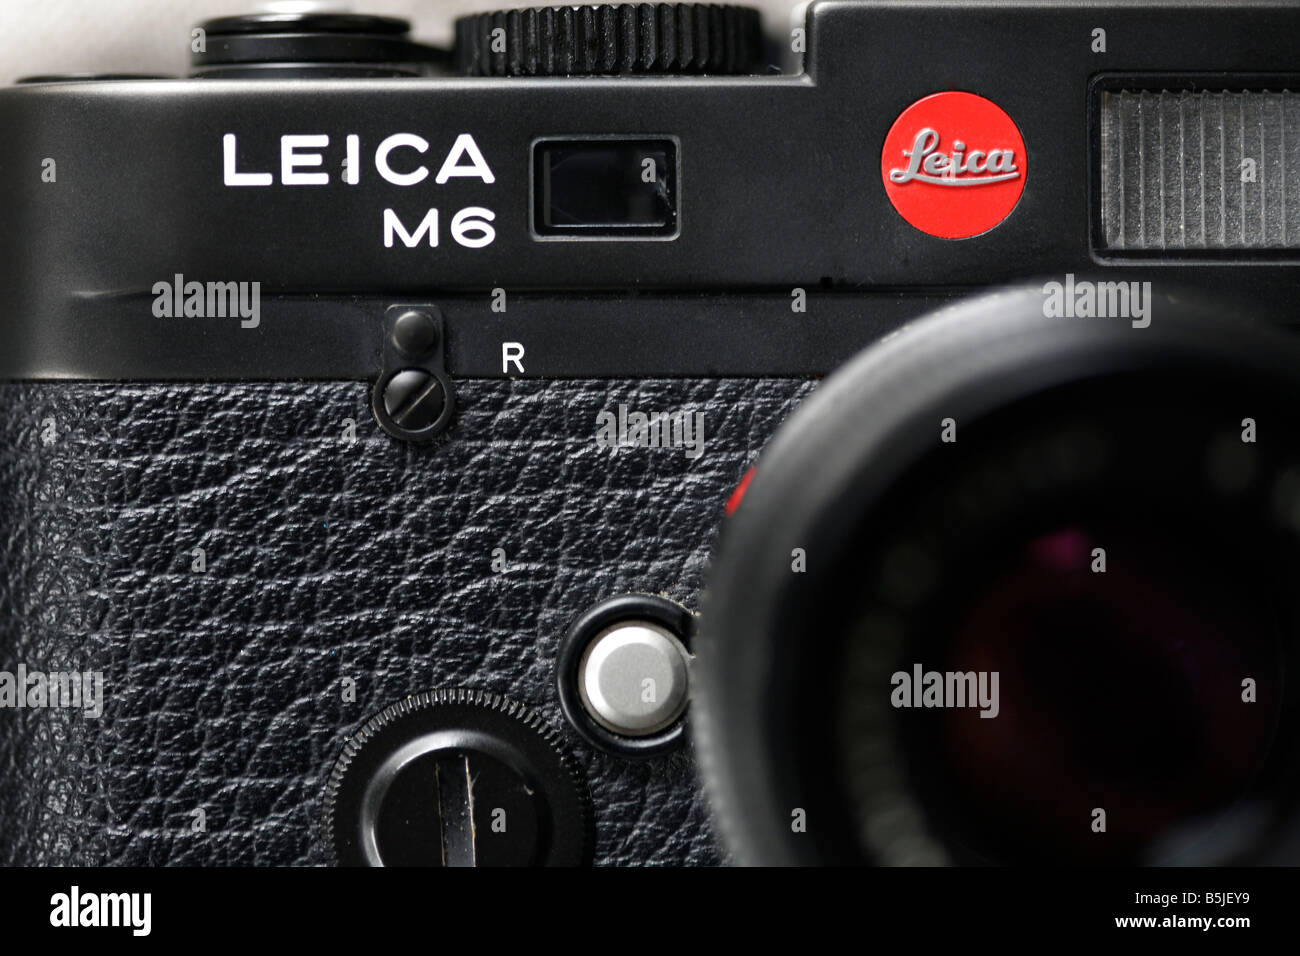 La legendaria cámara Leica. Foto de stock